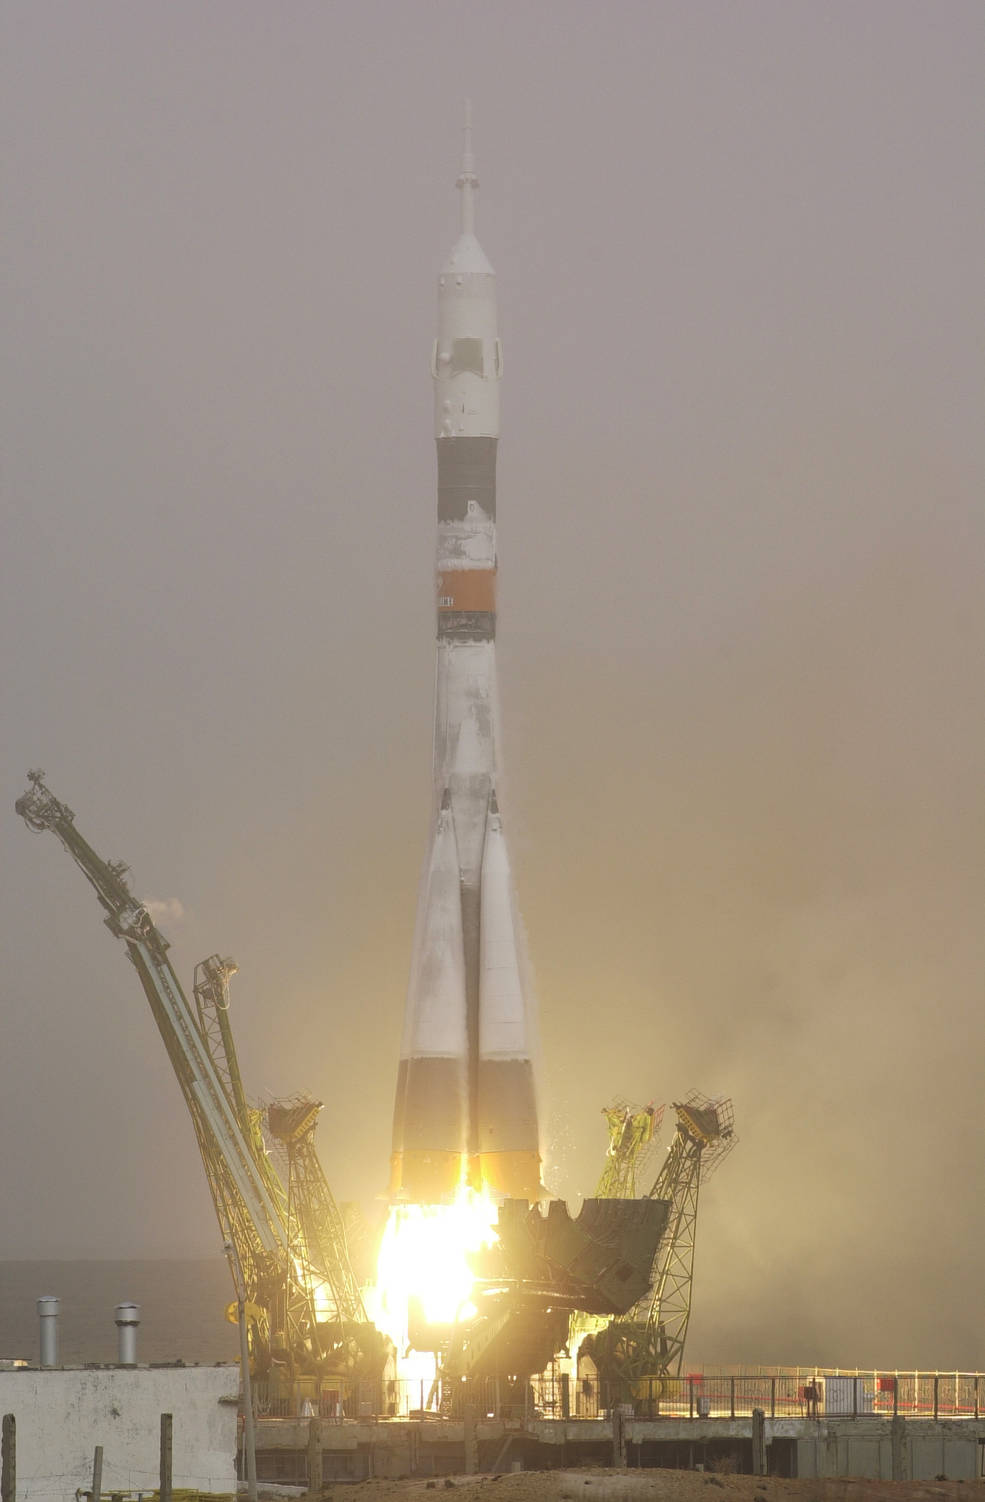 Launch of Soyuz TM-31 on October 31, 2000.